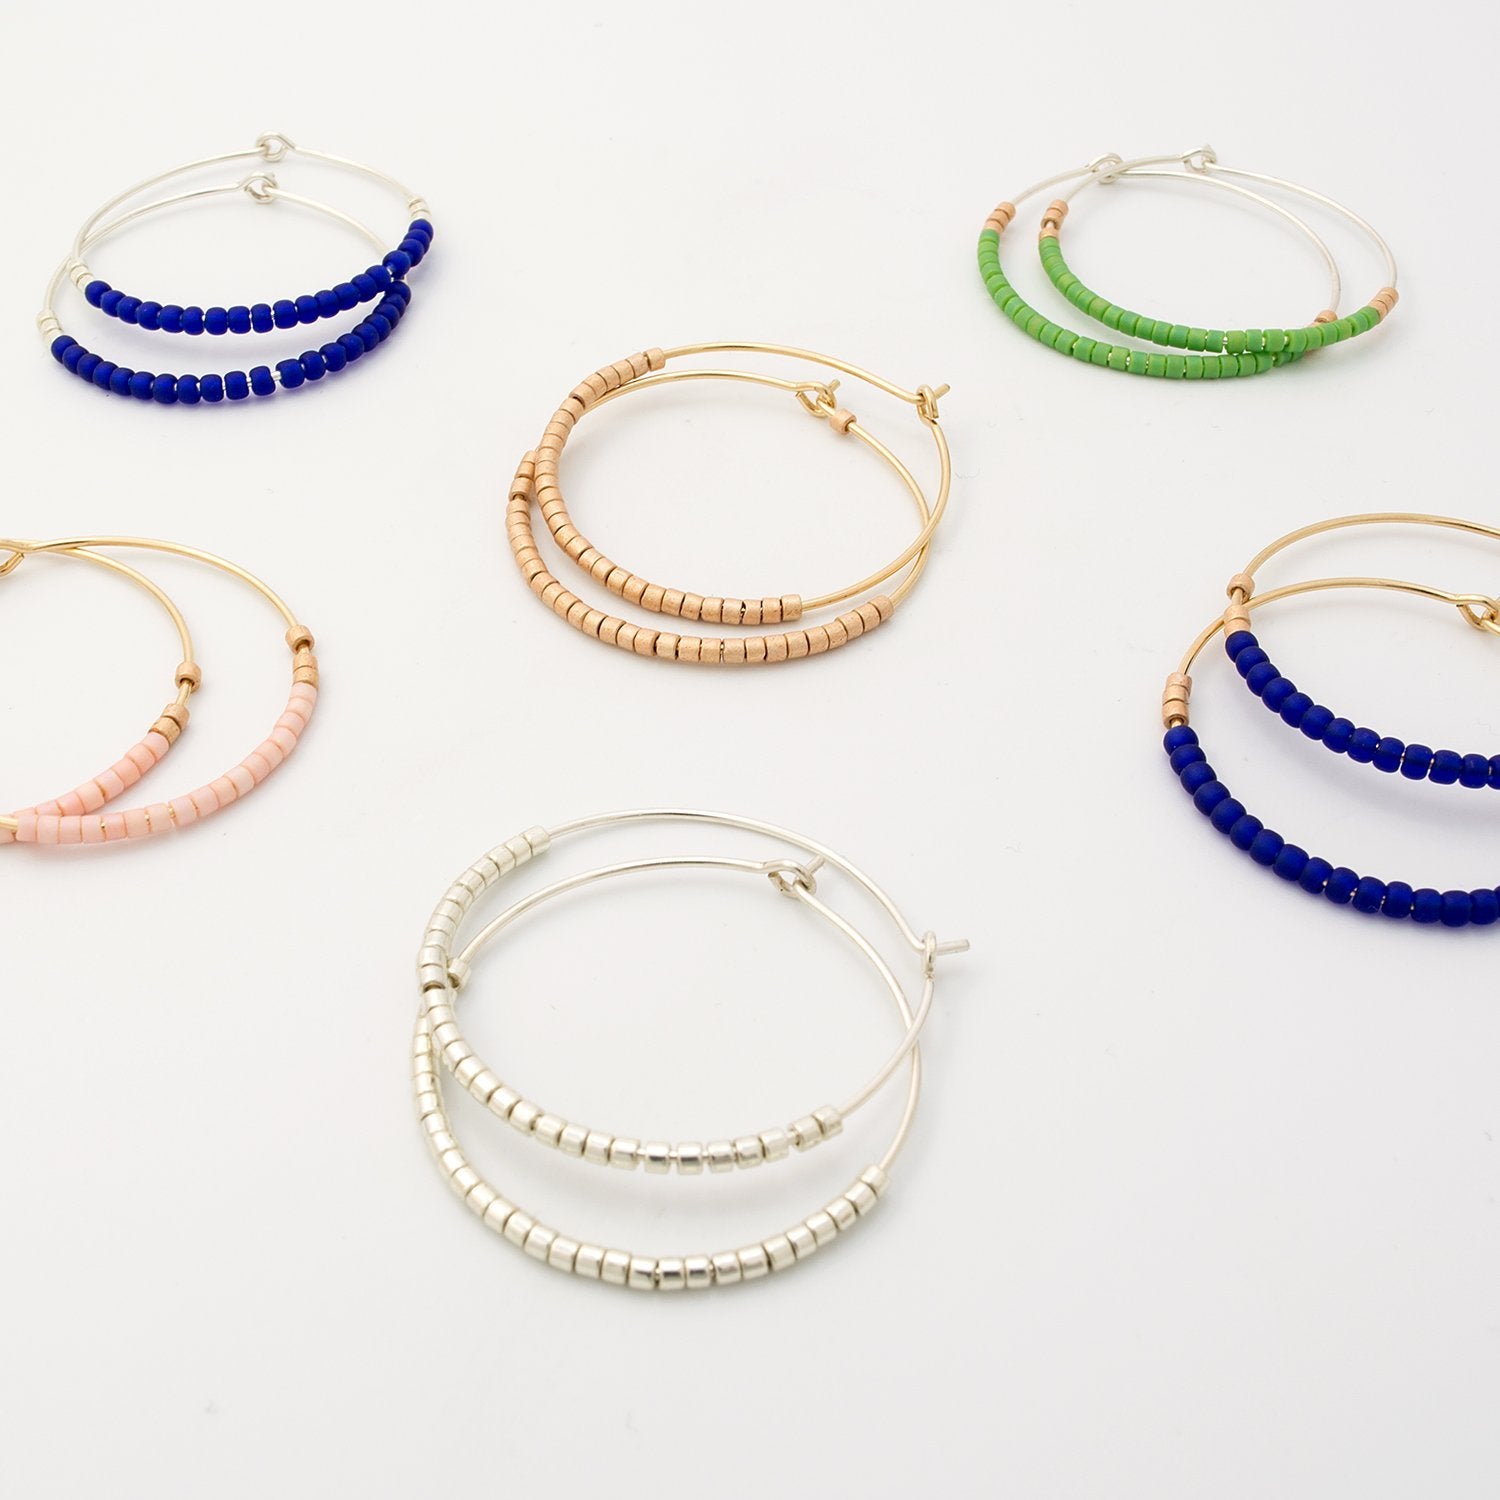 Beaded hoop earrings: pink & gold - Simone Walsh Jewellery Australia